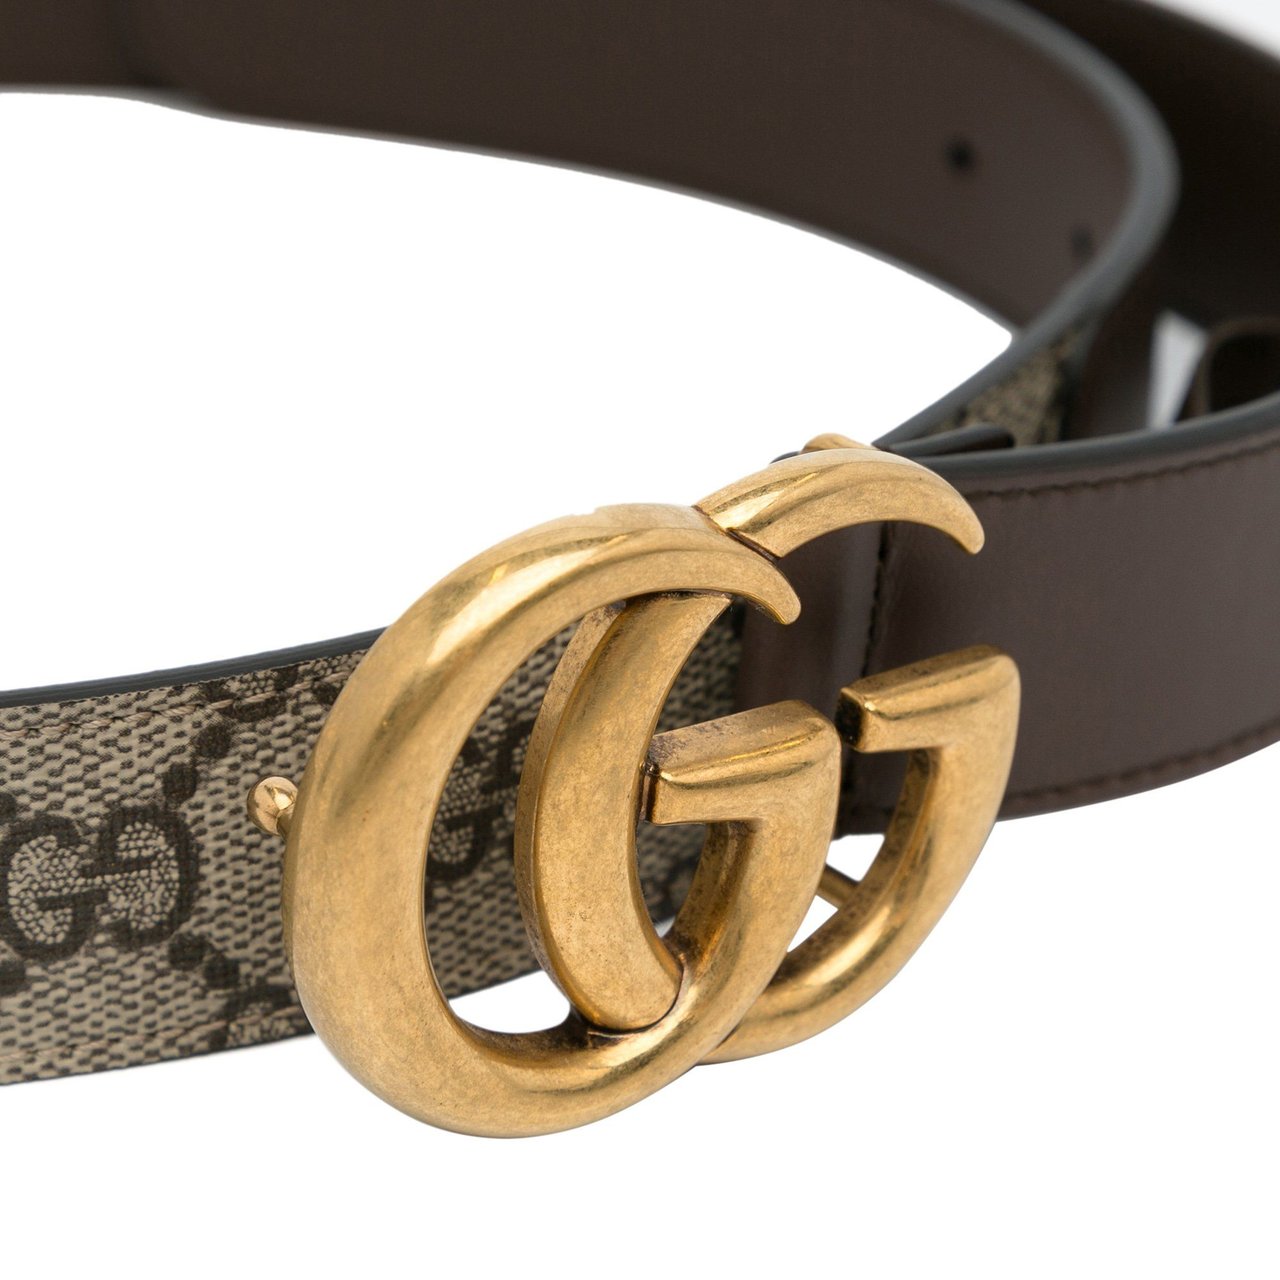 Gucci GG Marmont Logo Belt Bruin